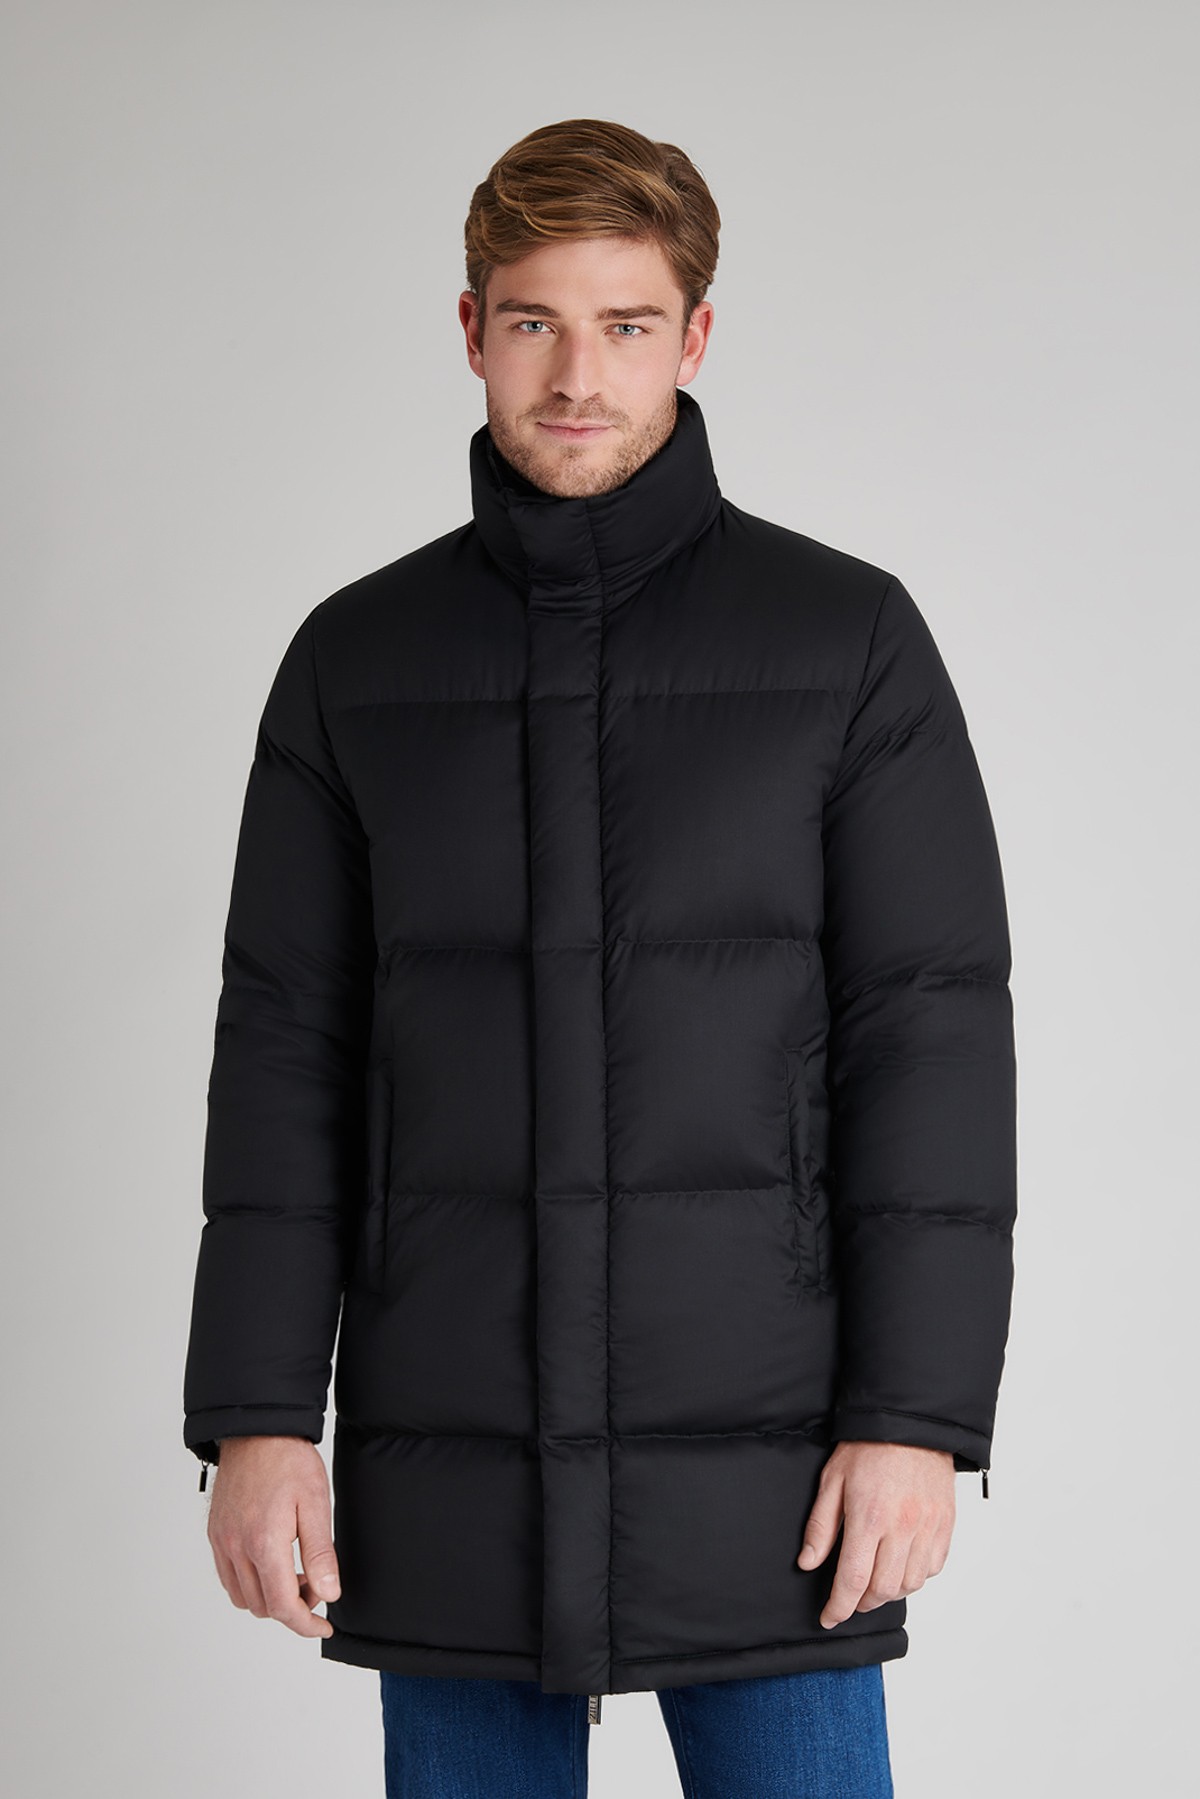 Black long padded coat, high collar